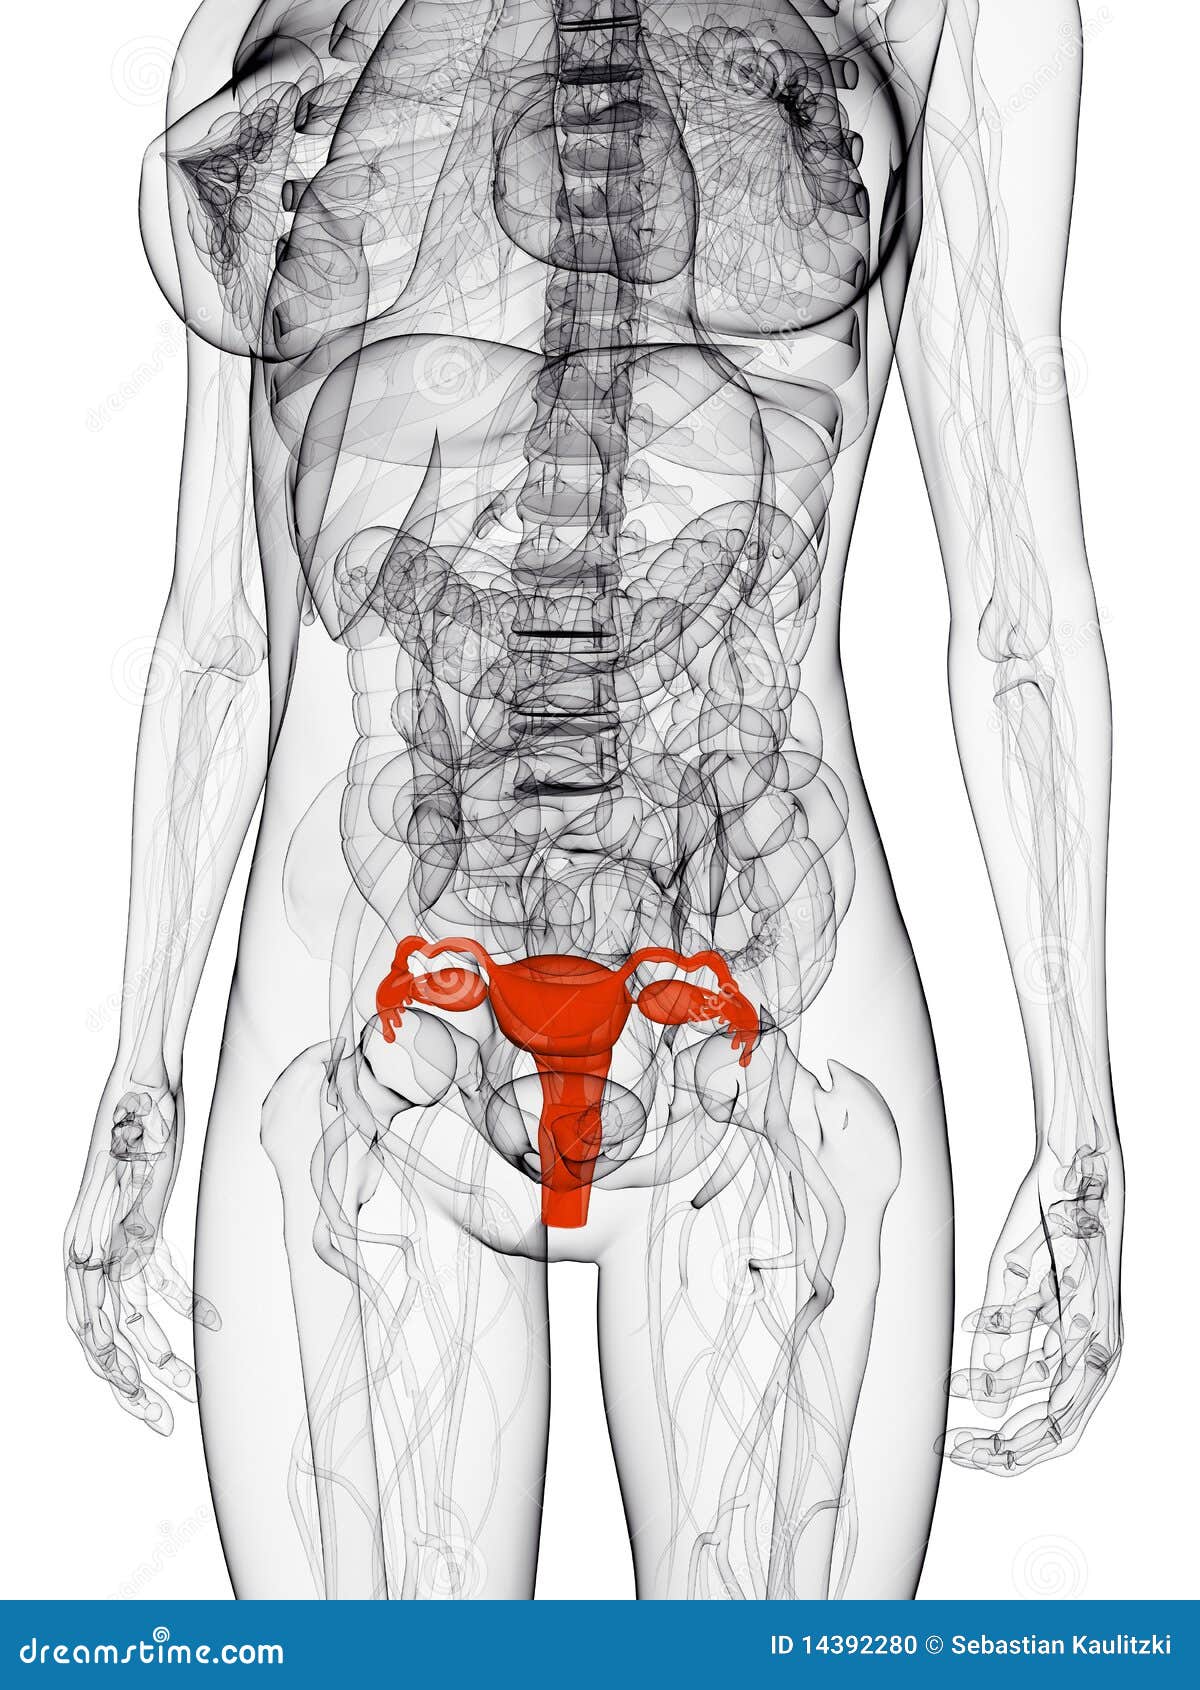 органы таза у женщины фото